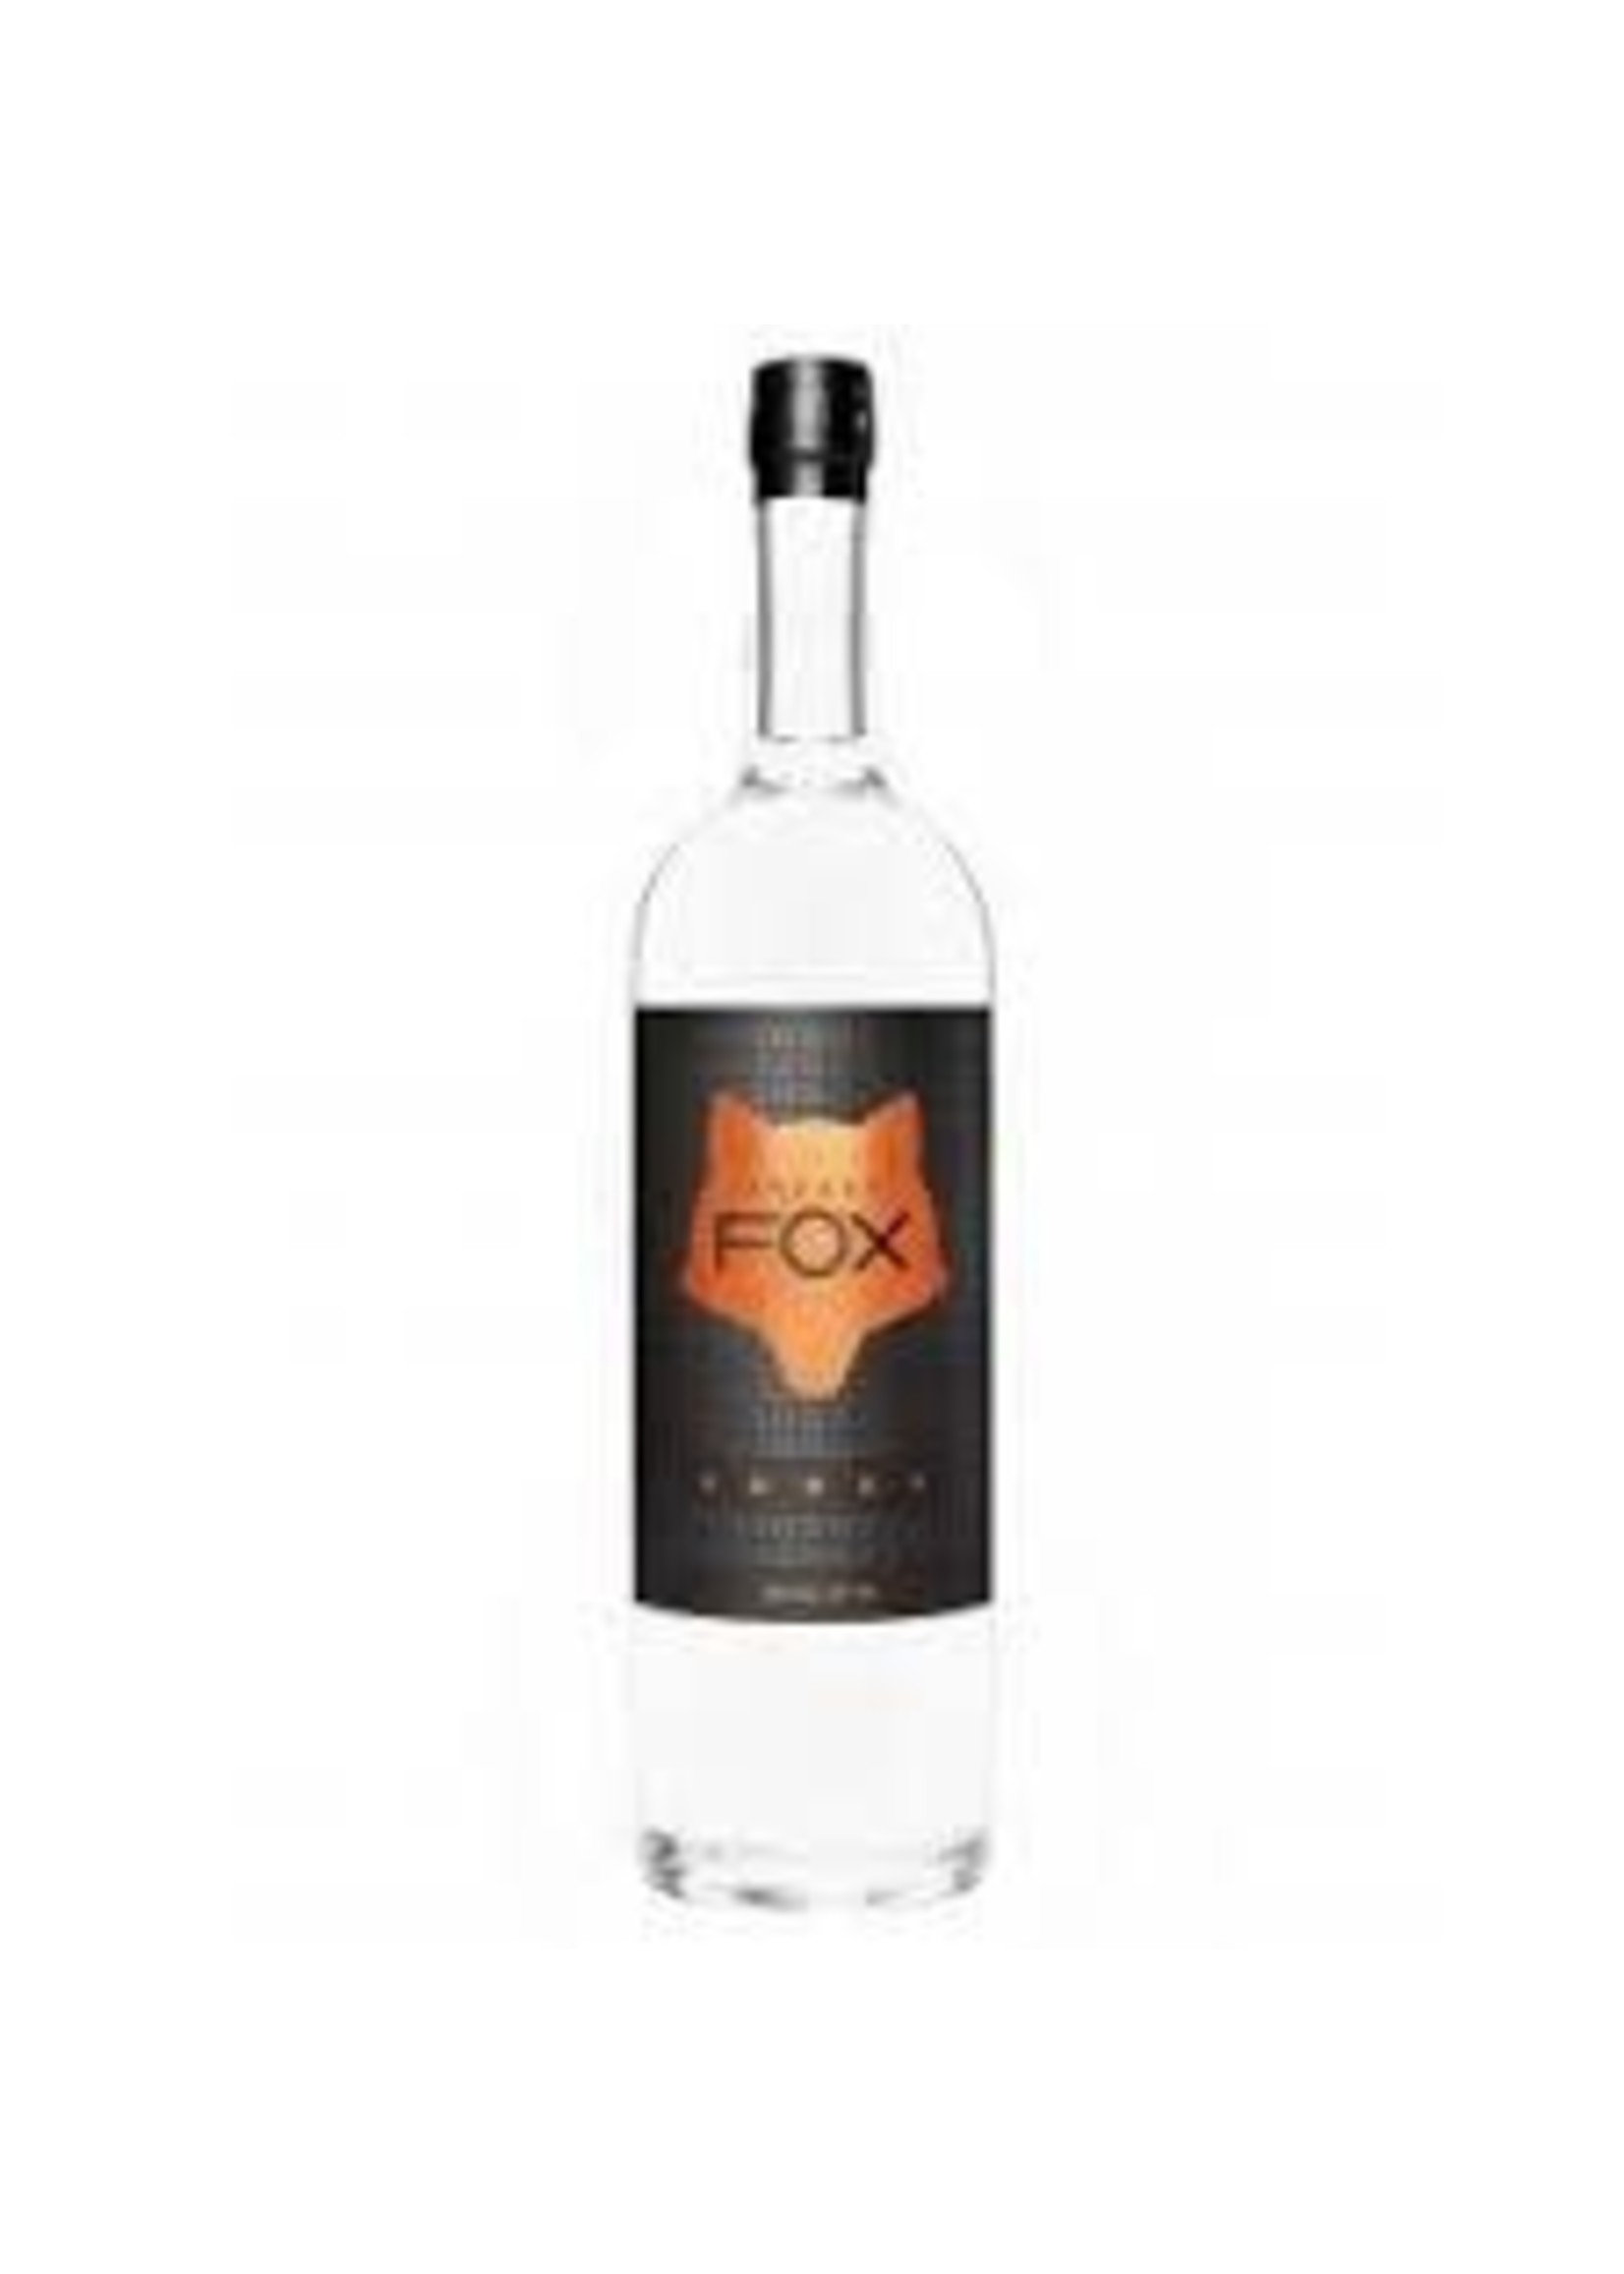 Sneaky Fox Vodka 750ml